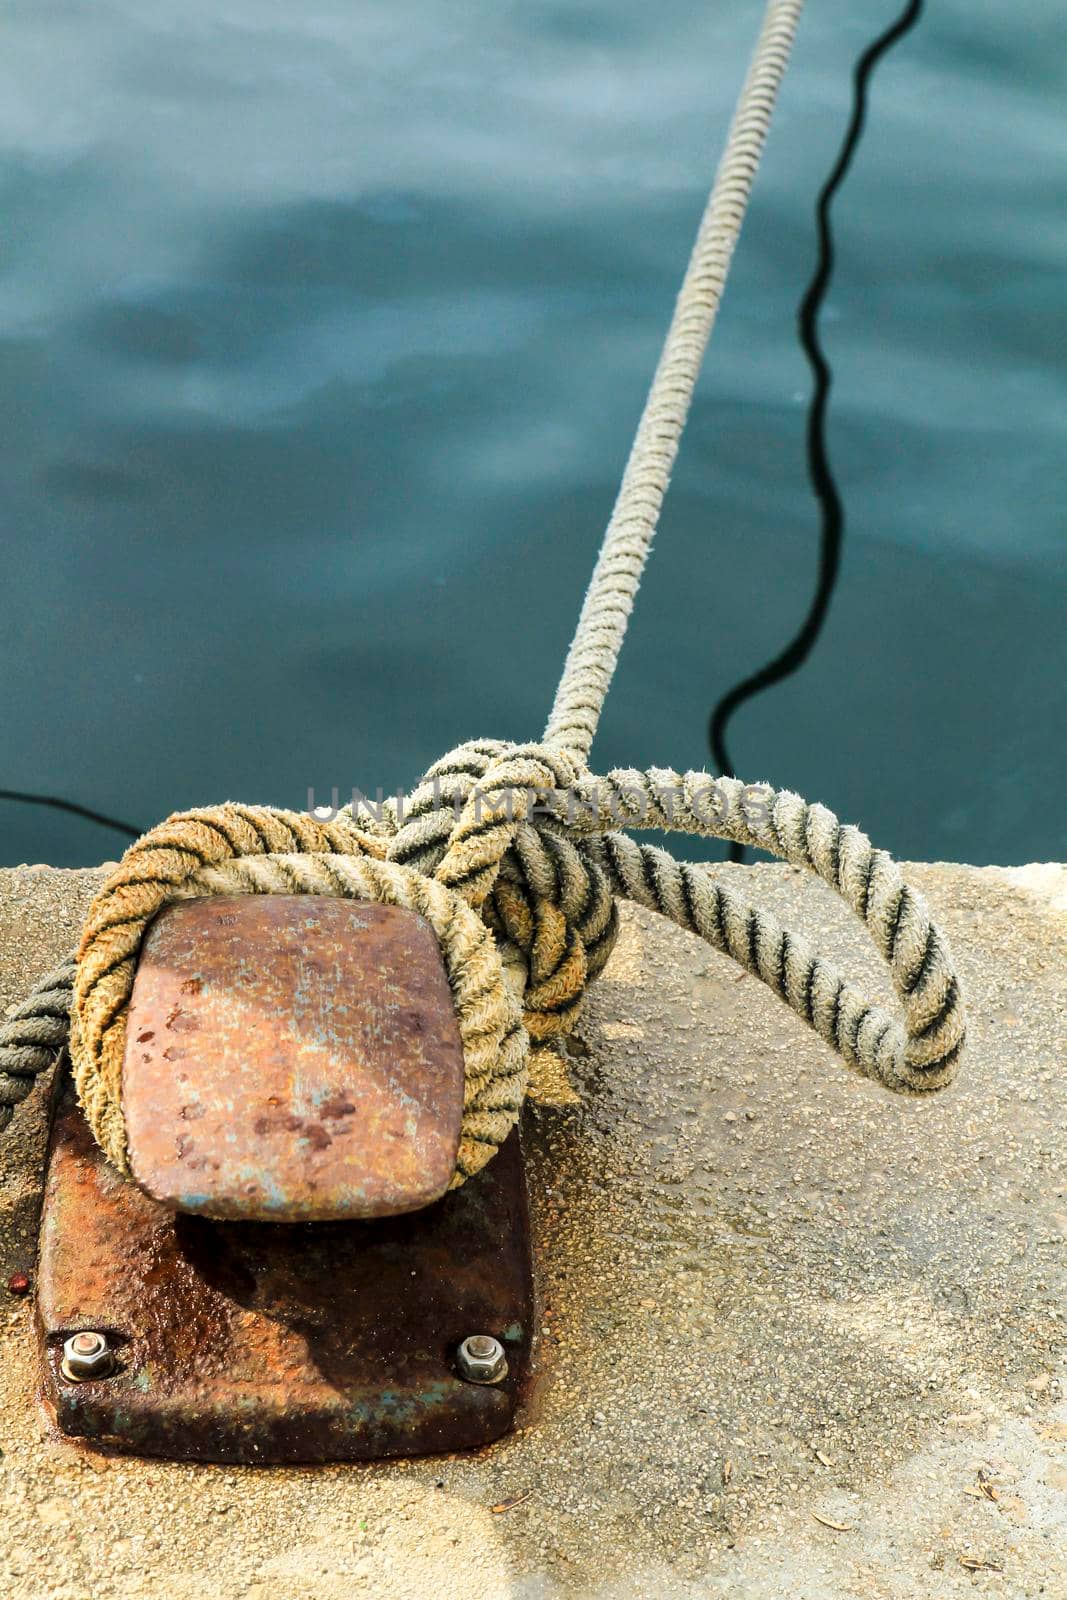 Rusty mooring bollard with tied rope in the port of Santa Pola, Alicante, Spain